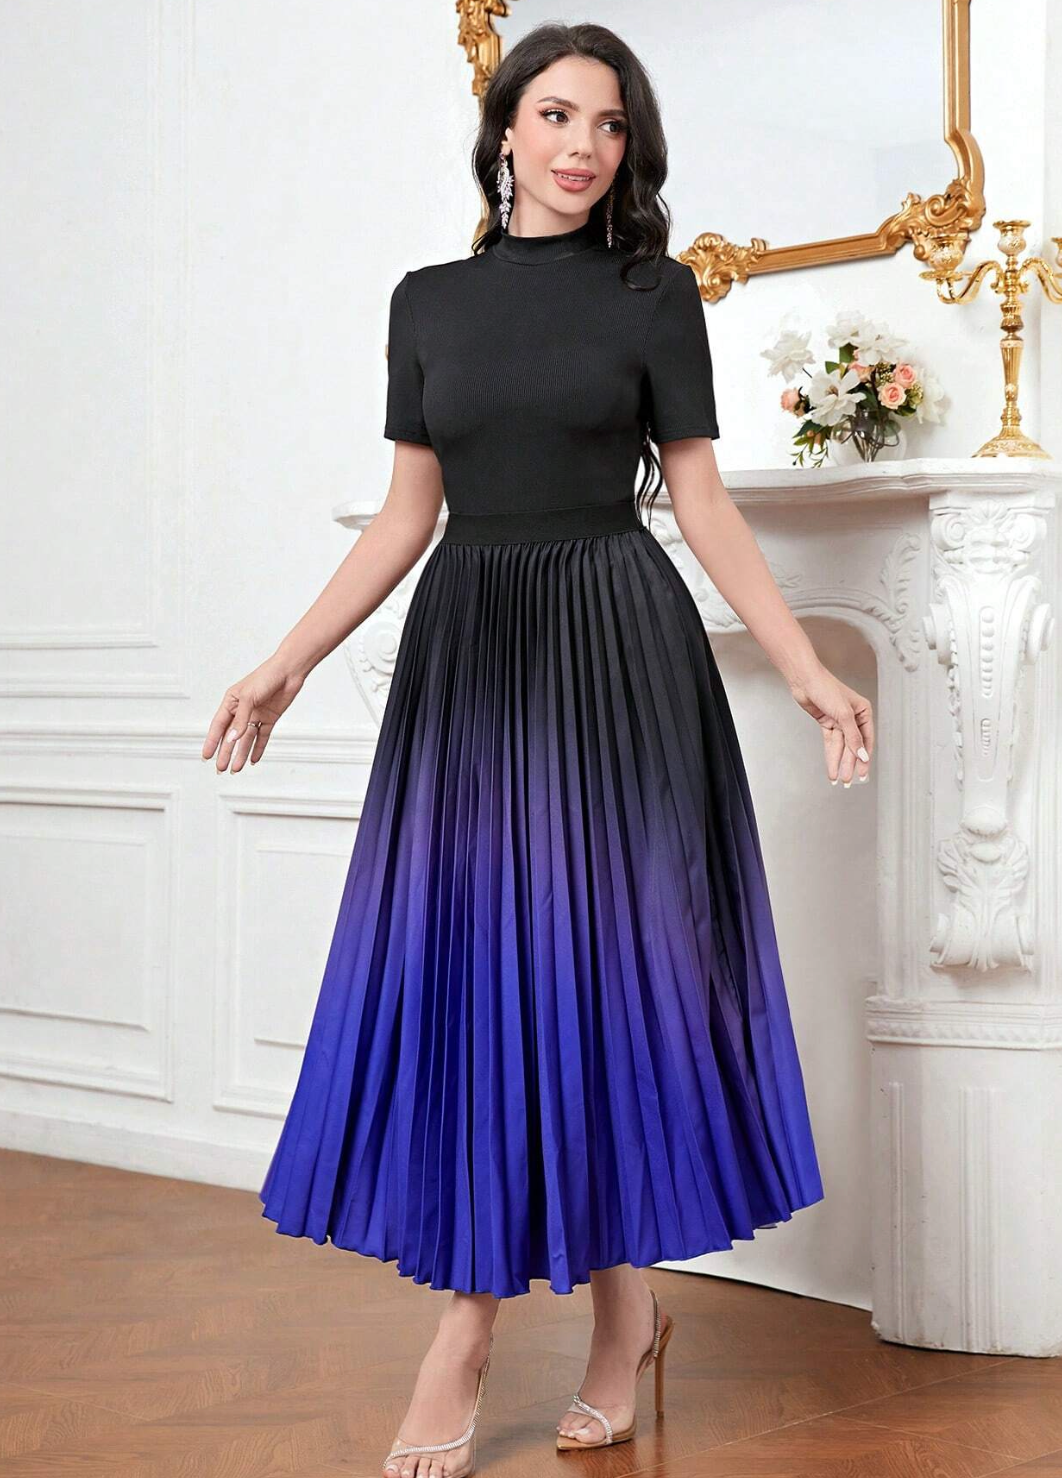 Stylish Top & Ombre Skirt Set